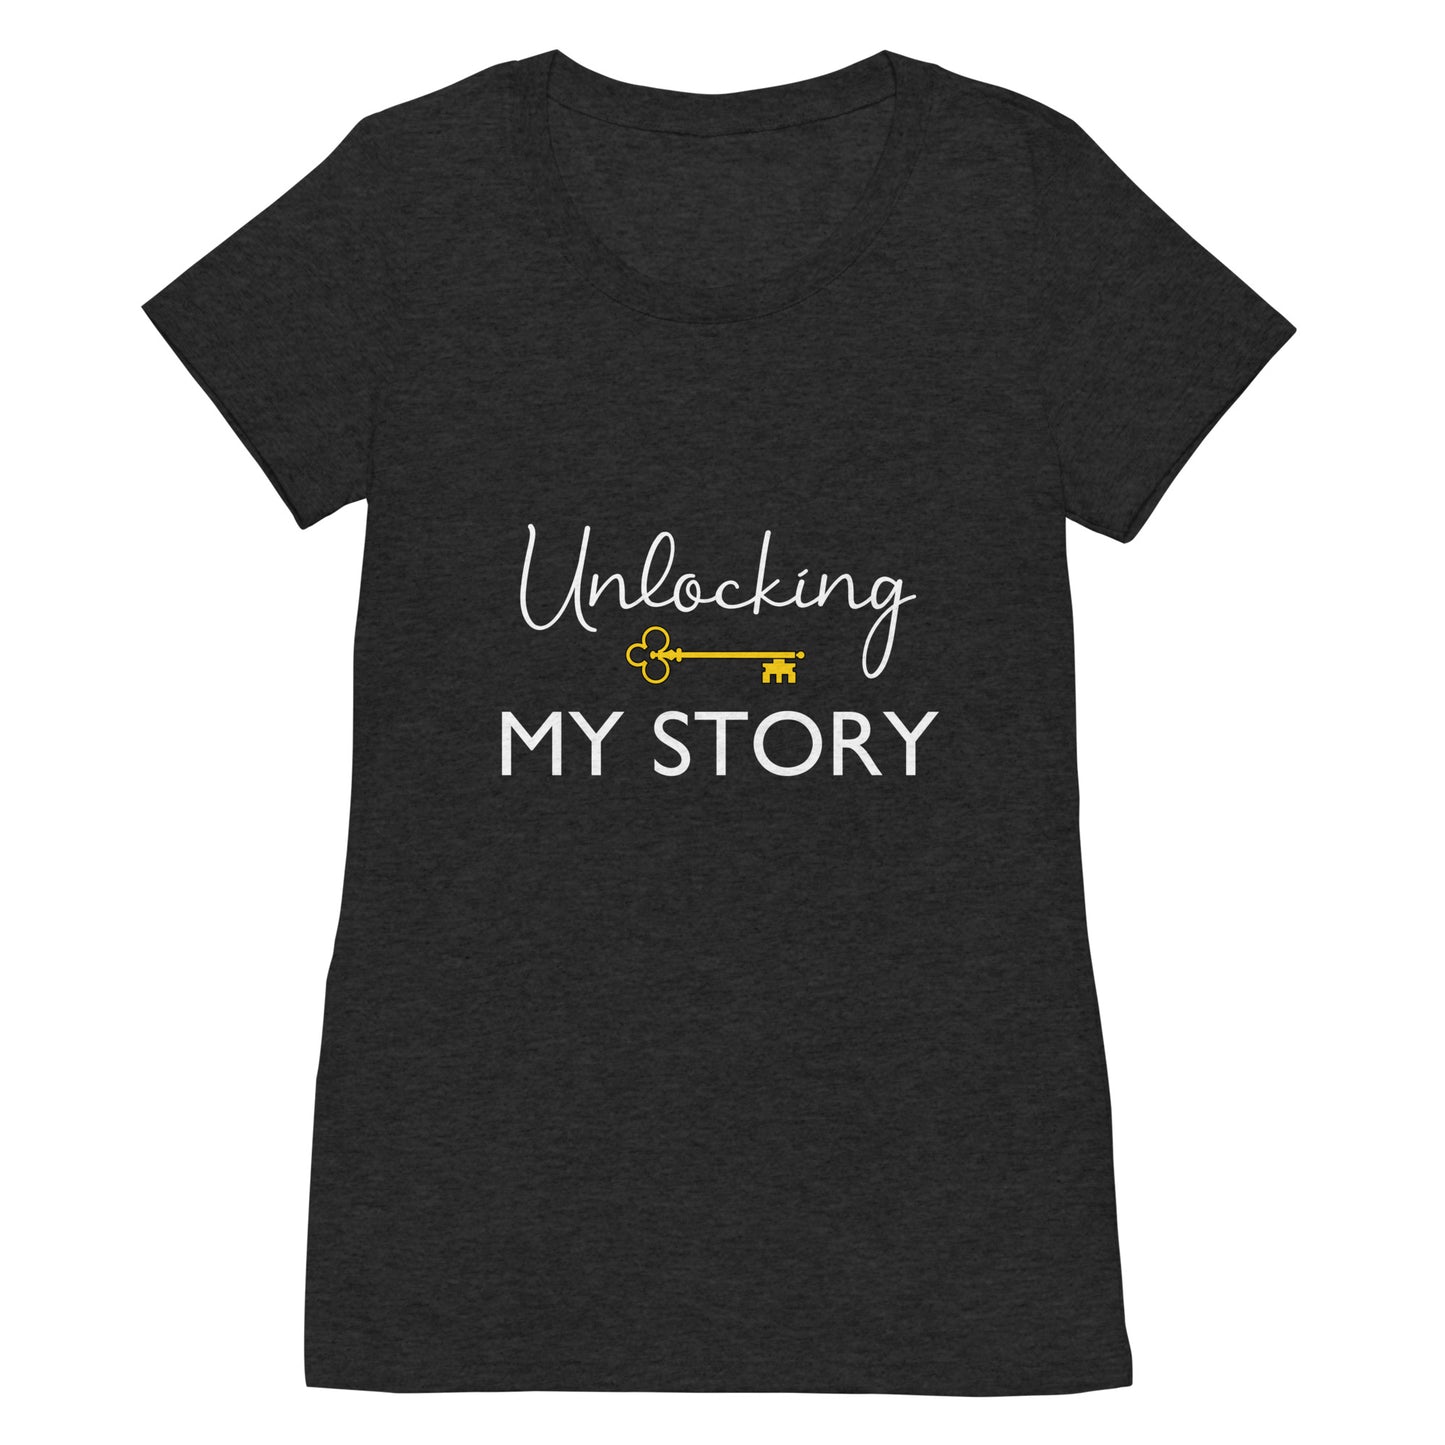 Unlocking MY STORY Ladies' short sleeve t-shirt